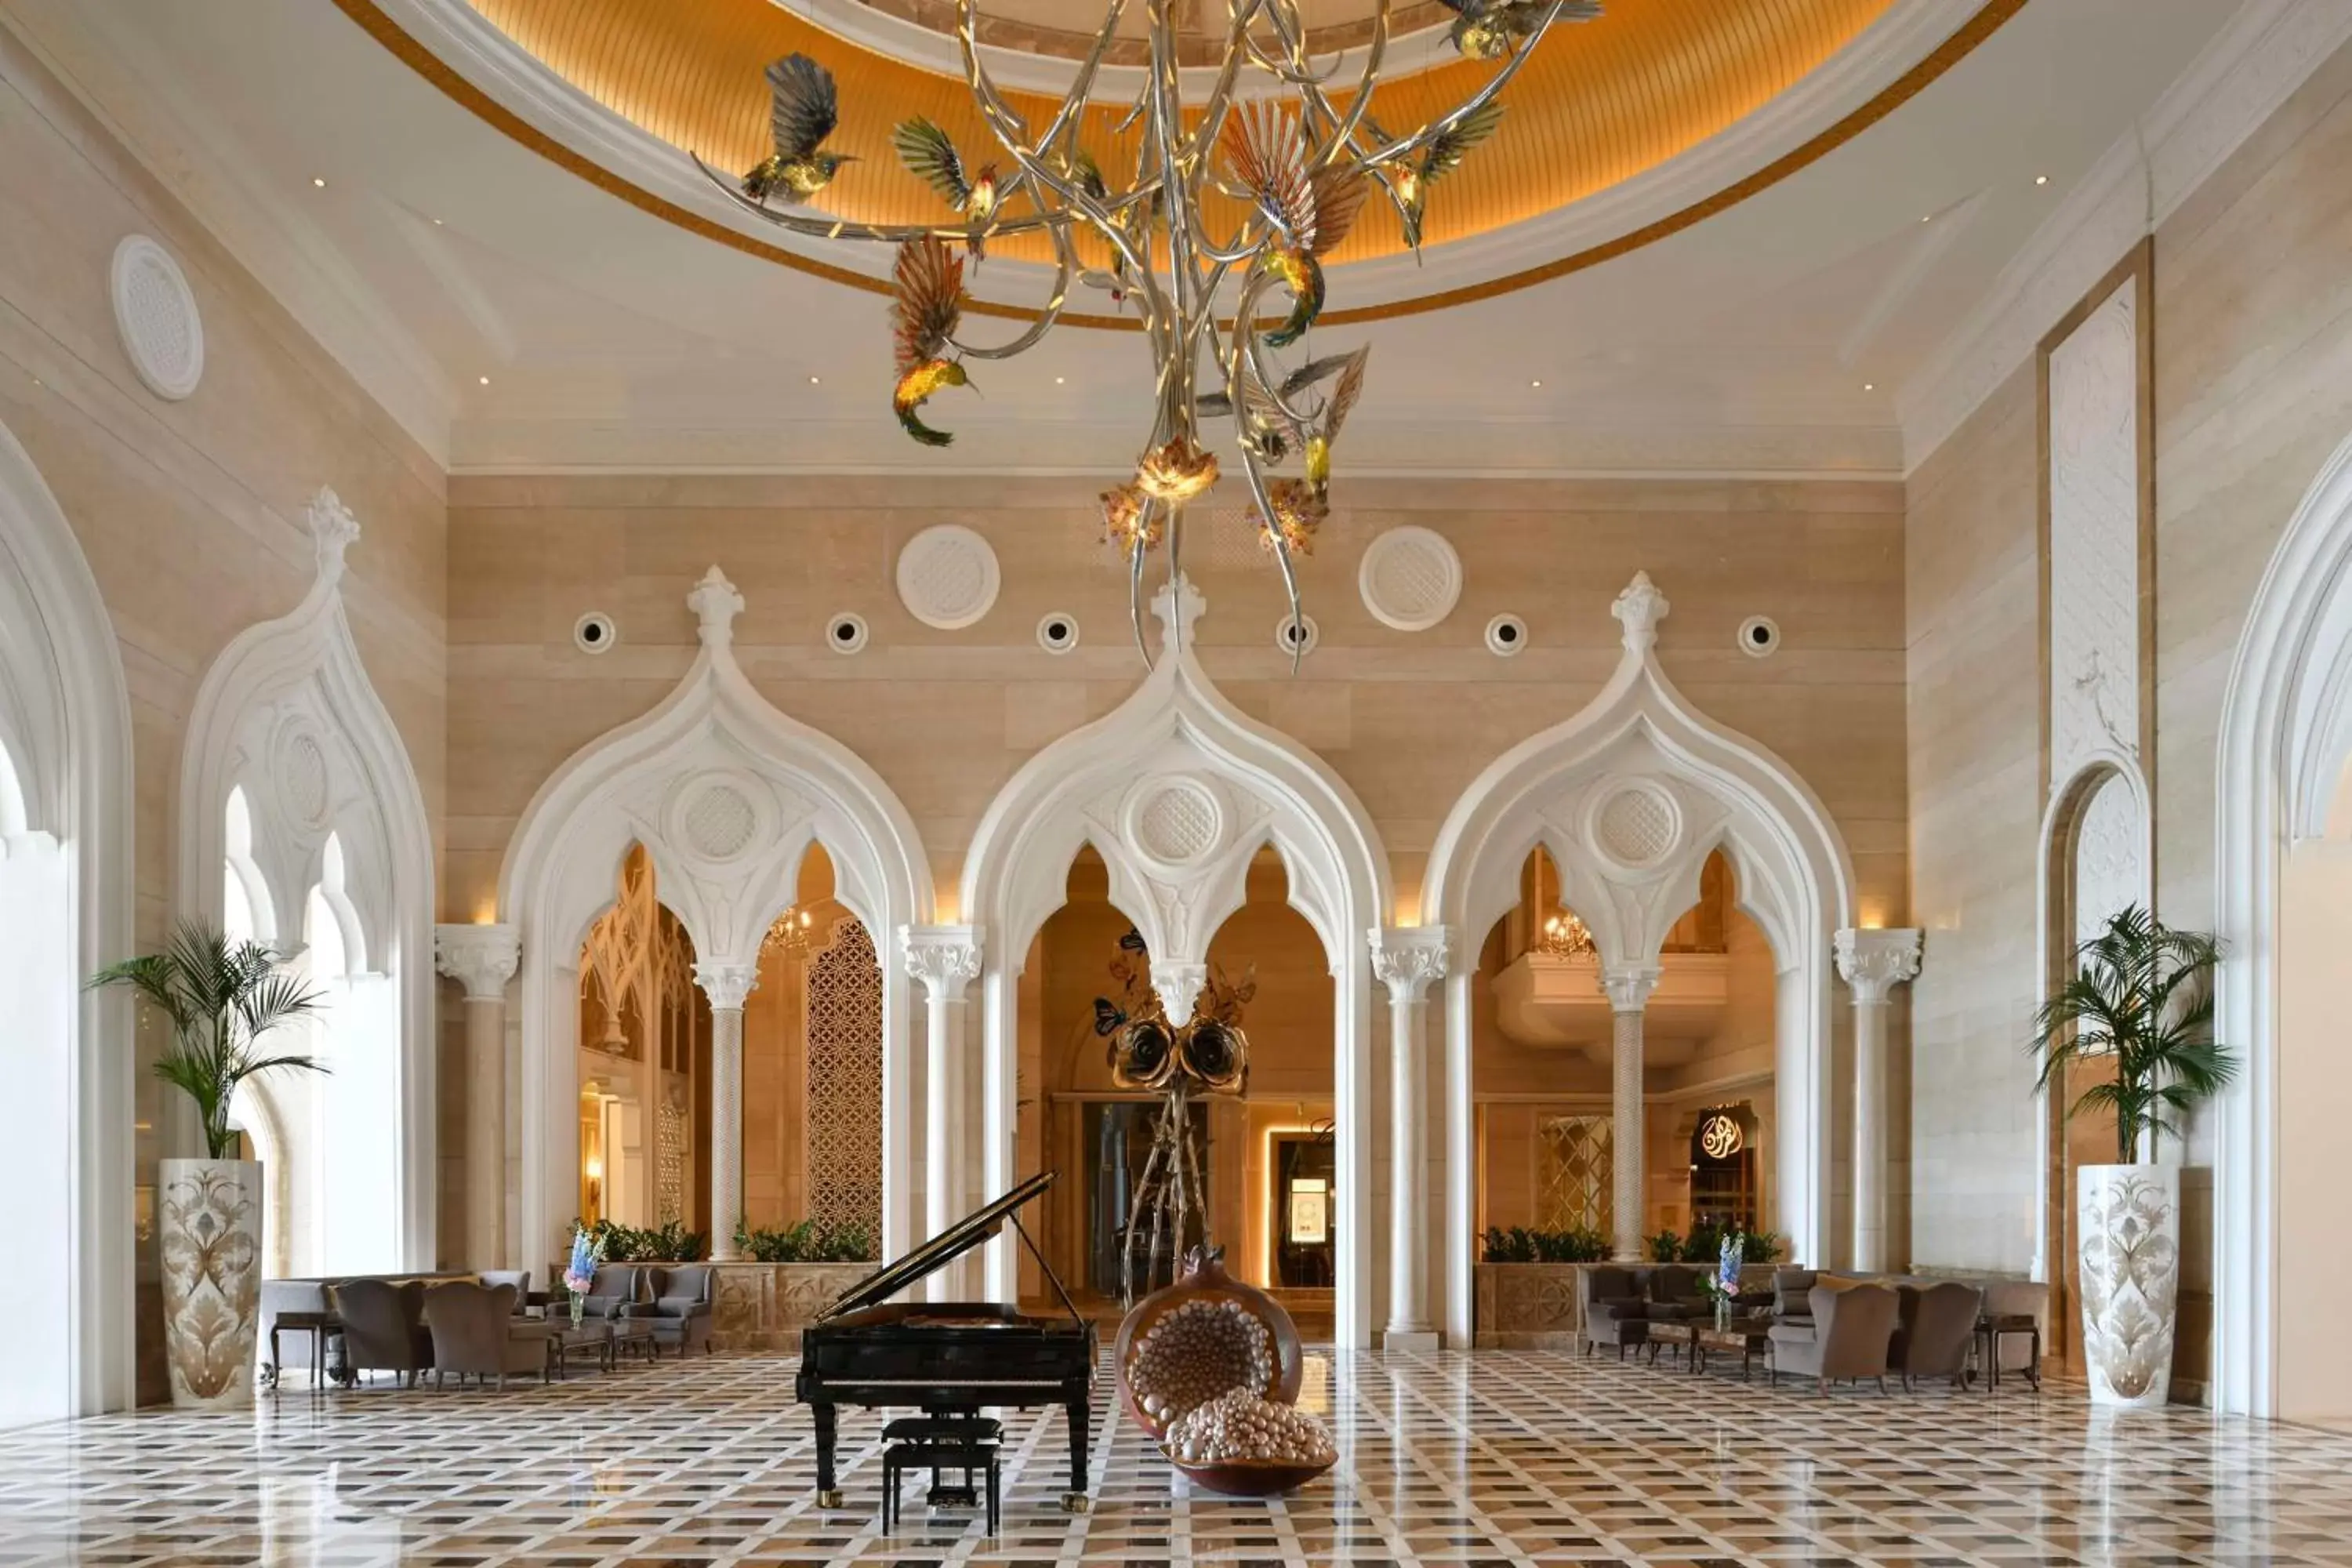 Lobby or reception in Marsa Malaz Kempinski, The Pearl